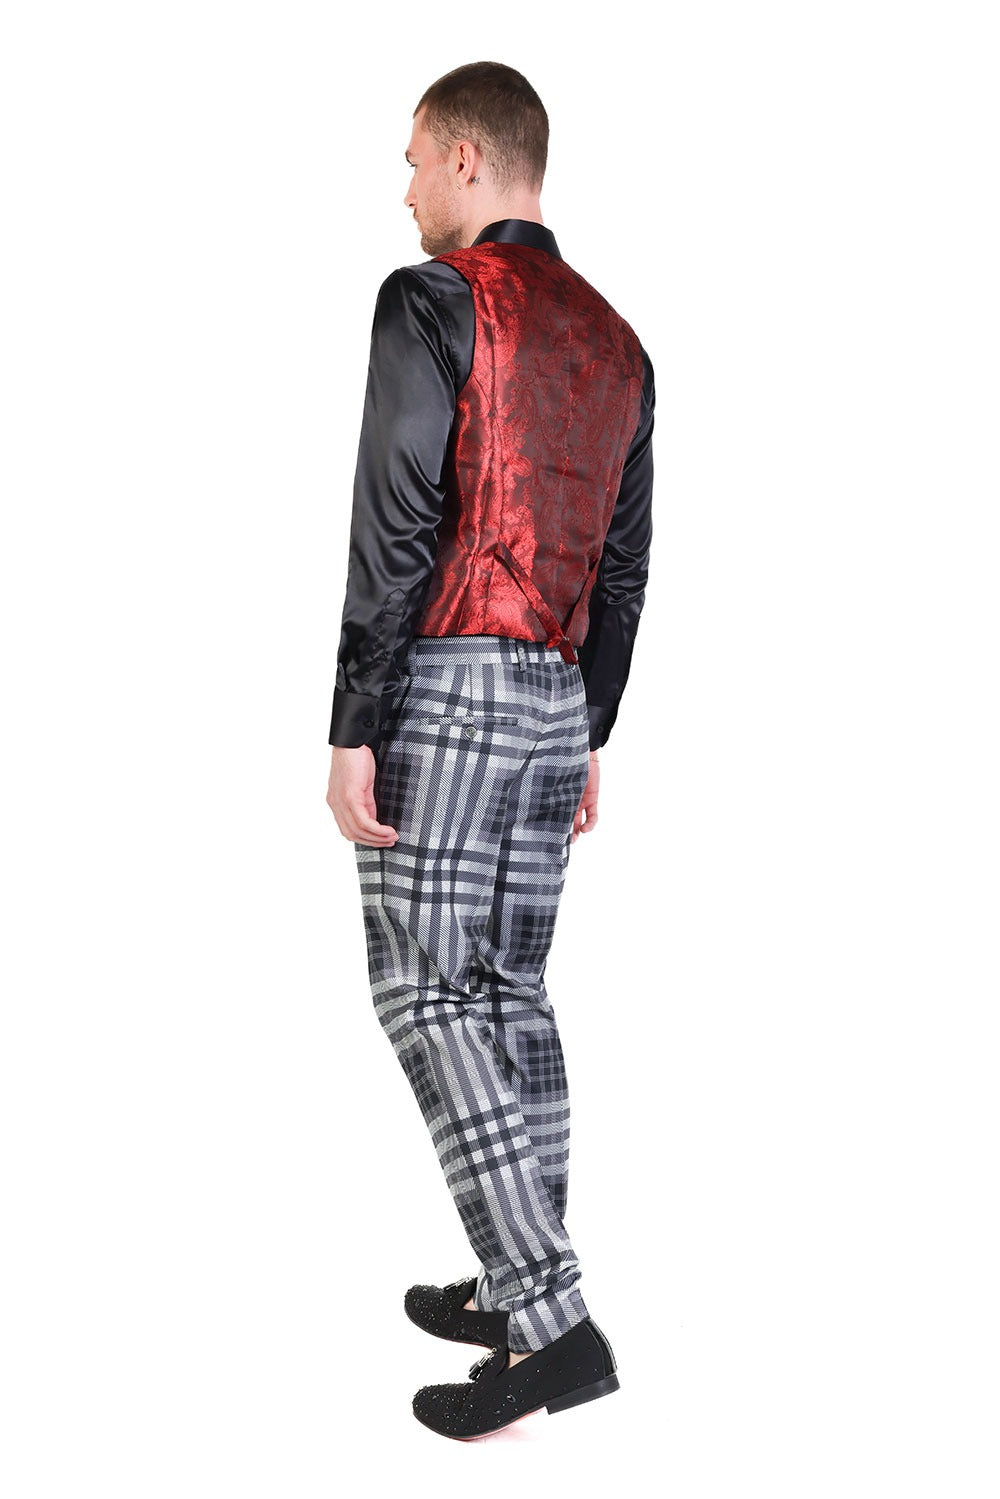 Barabas Men's Luxury Plaid Checkered Dress Slim Fit  Vests VP201 Black